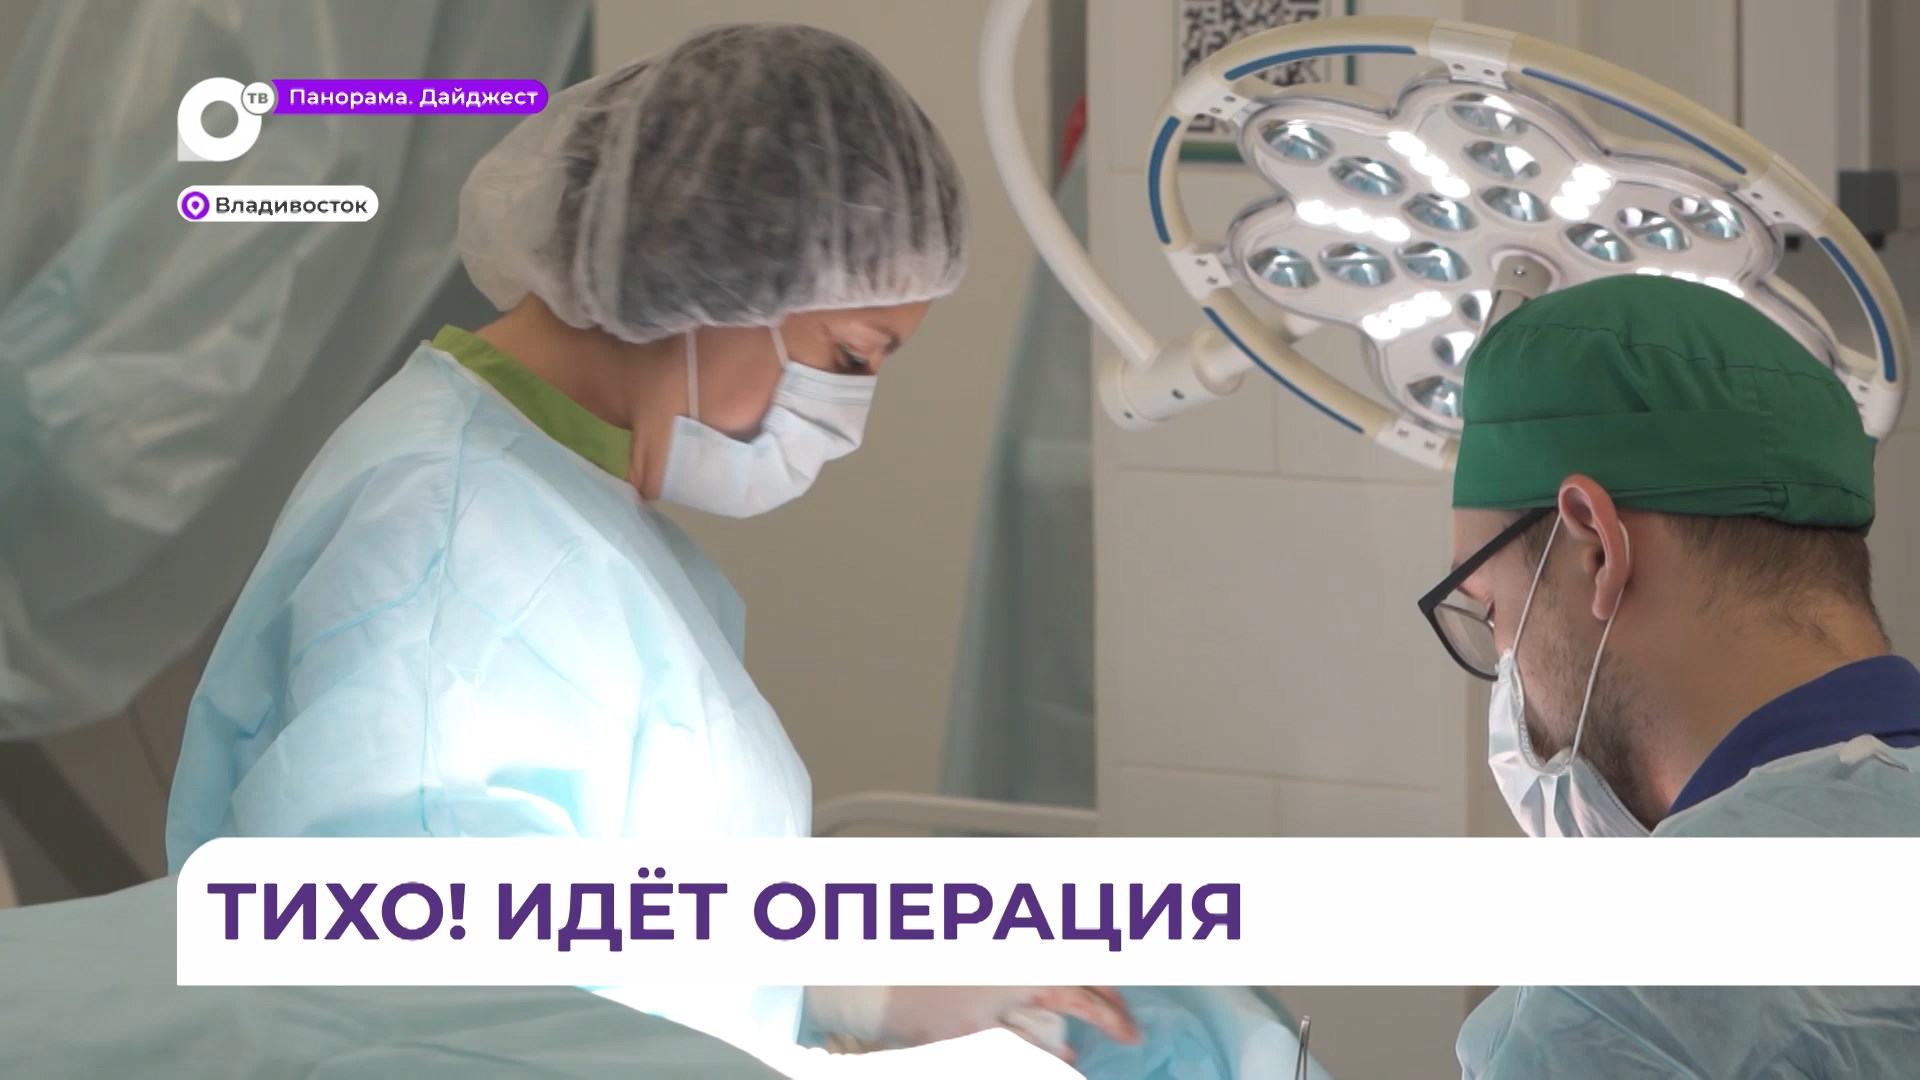 Ювелирную операцию кисти руки провел врач поликлиники № 6 Владивостока